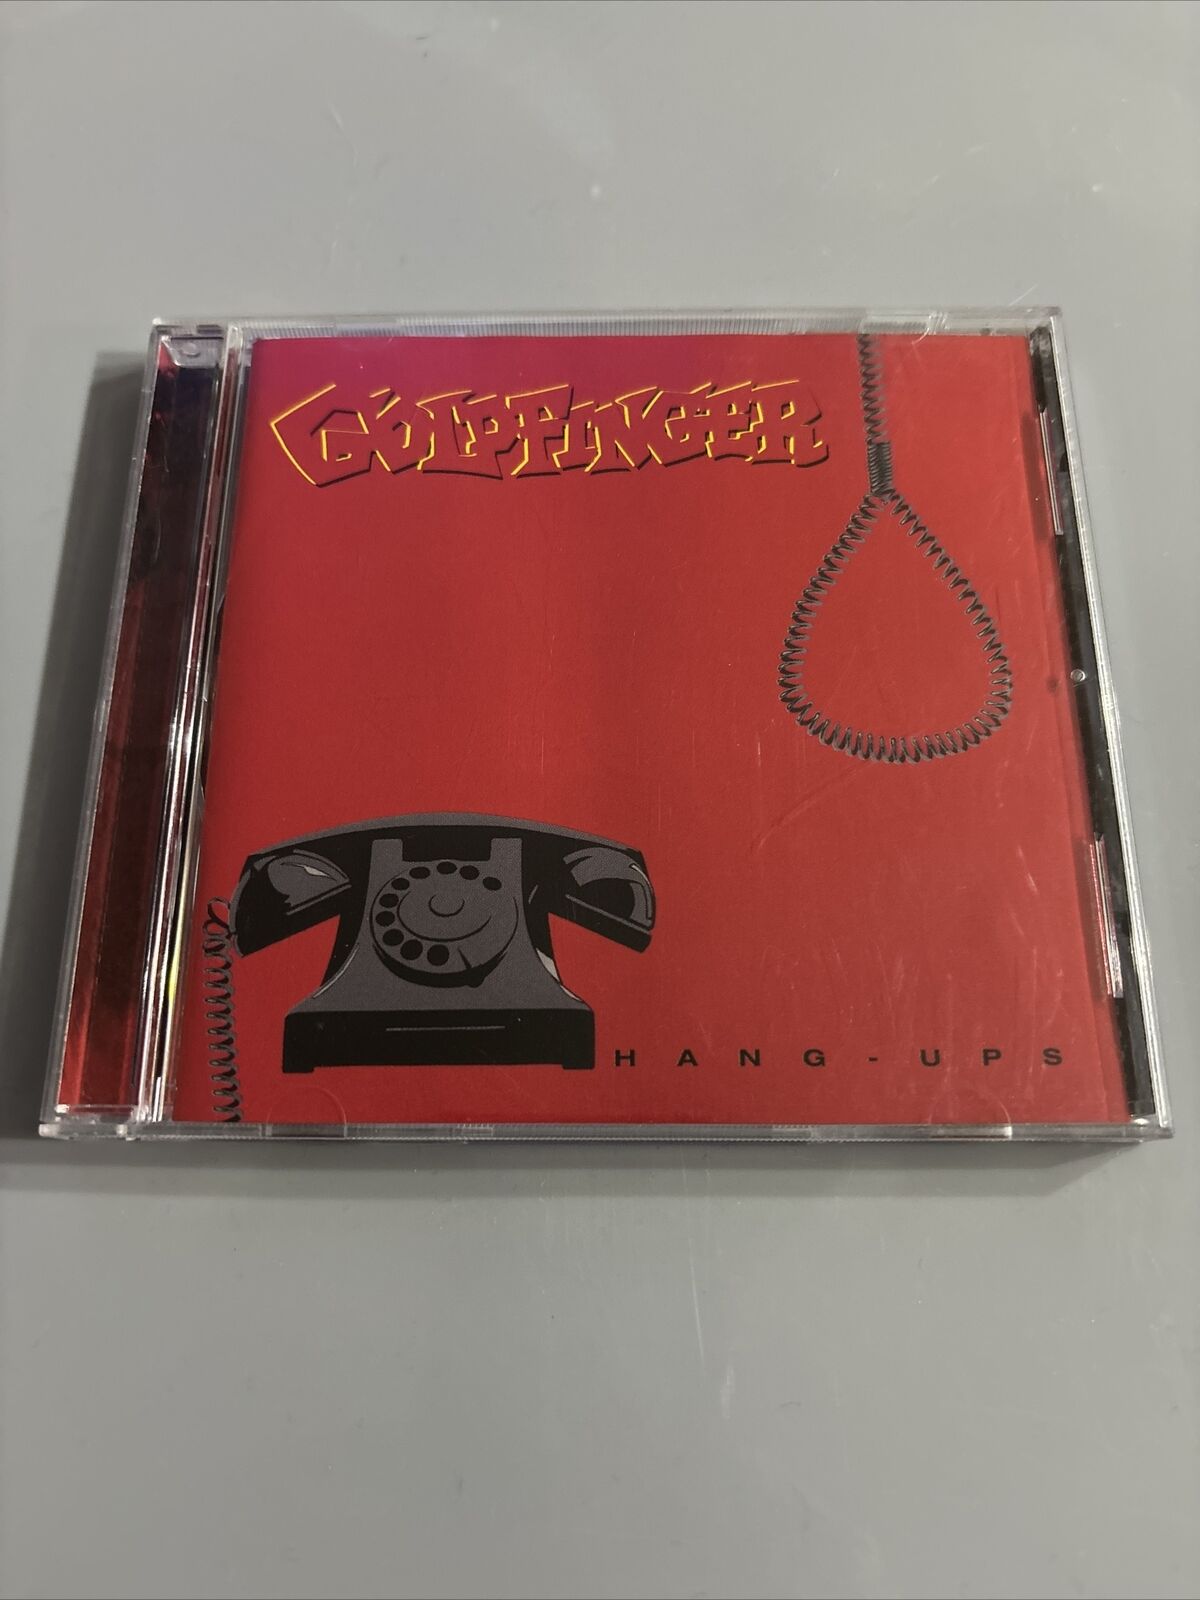 Hang-Ups by Goldfinger (CD, 1997, MOJO)